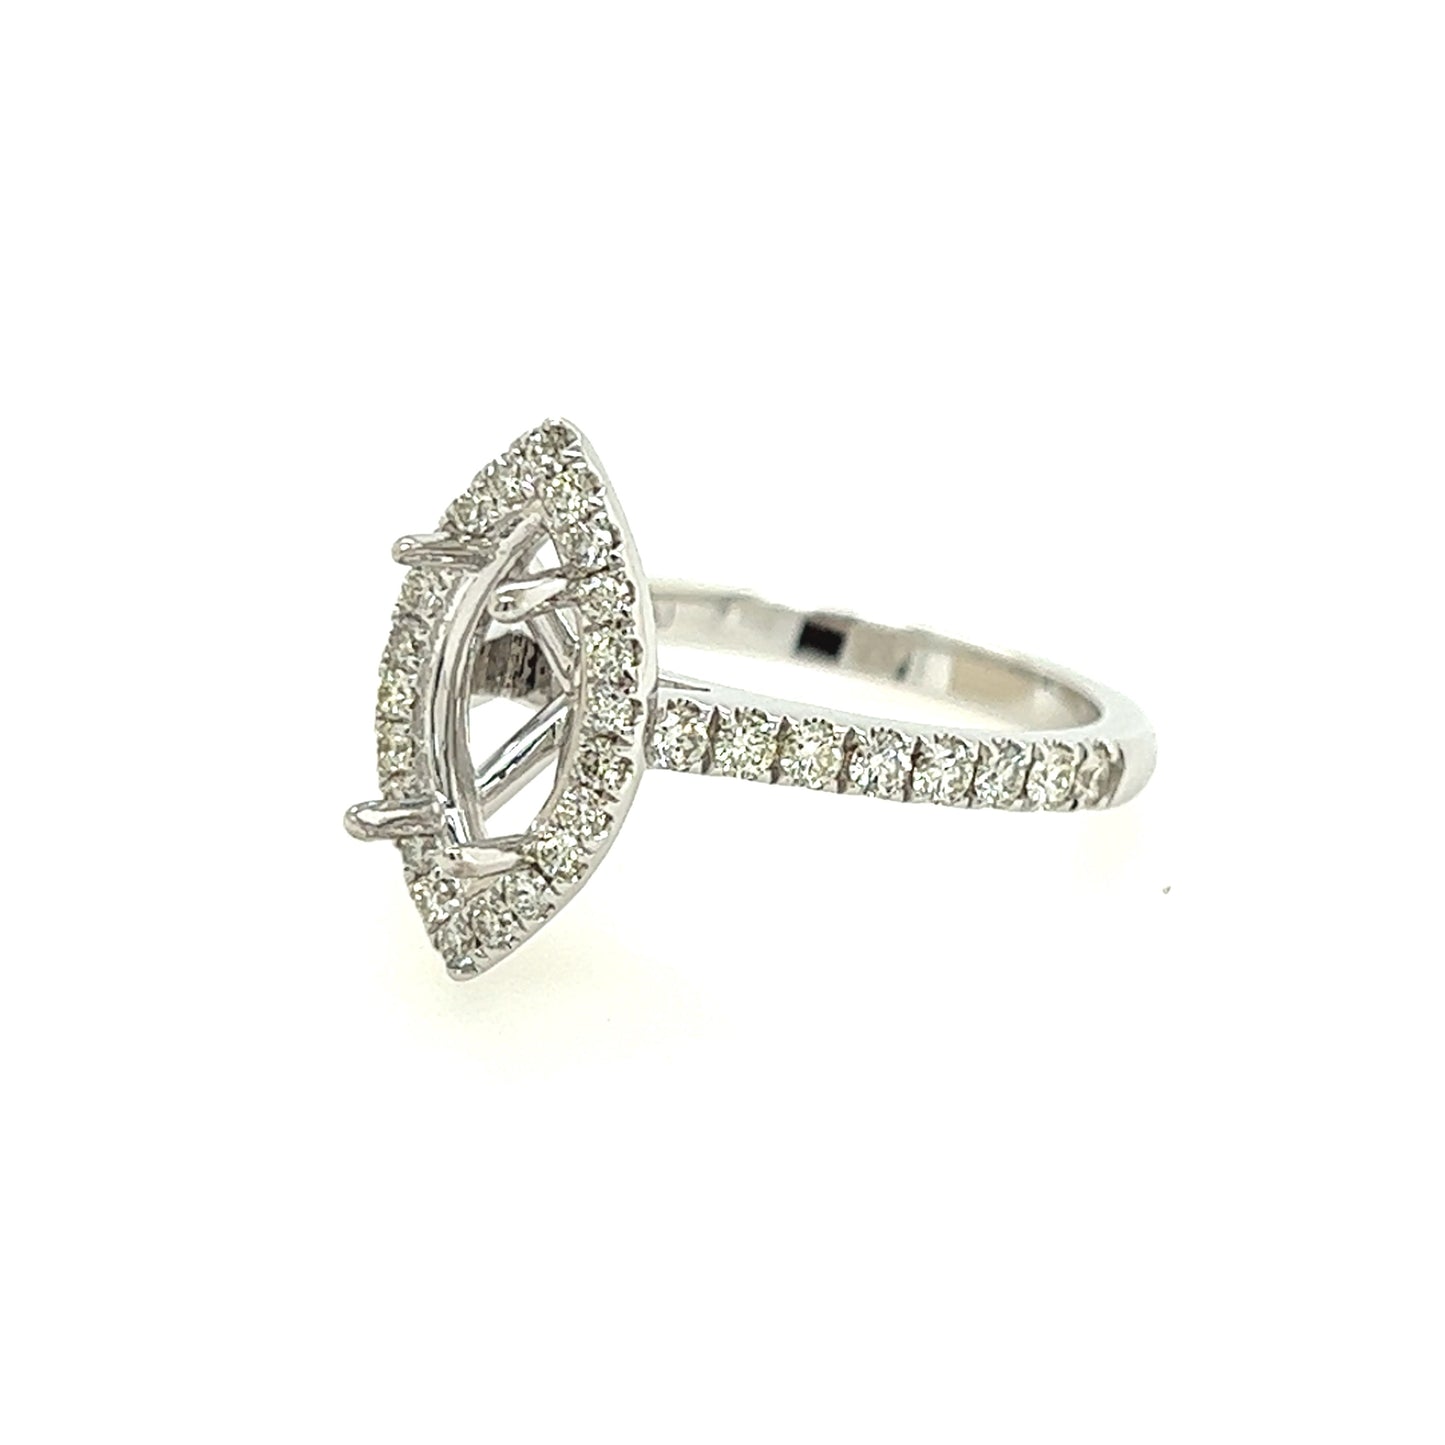 17629R Ring With Diamond